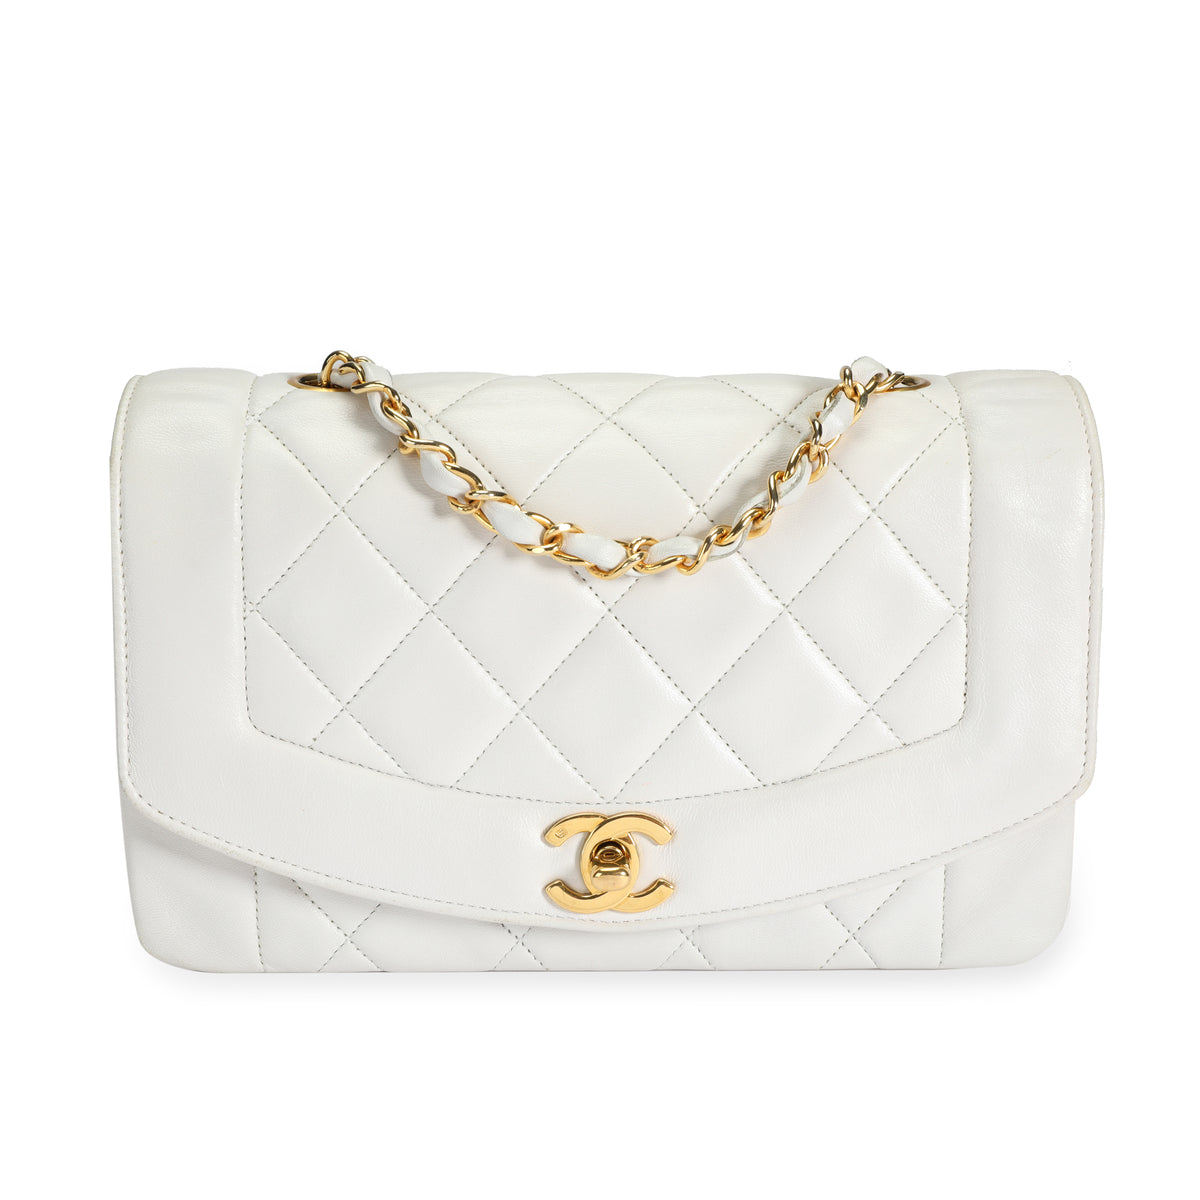 The Chanel Diana Bag, myGemma